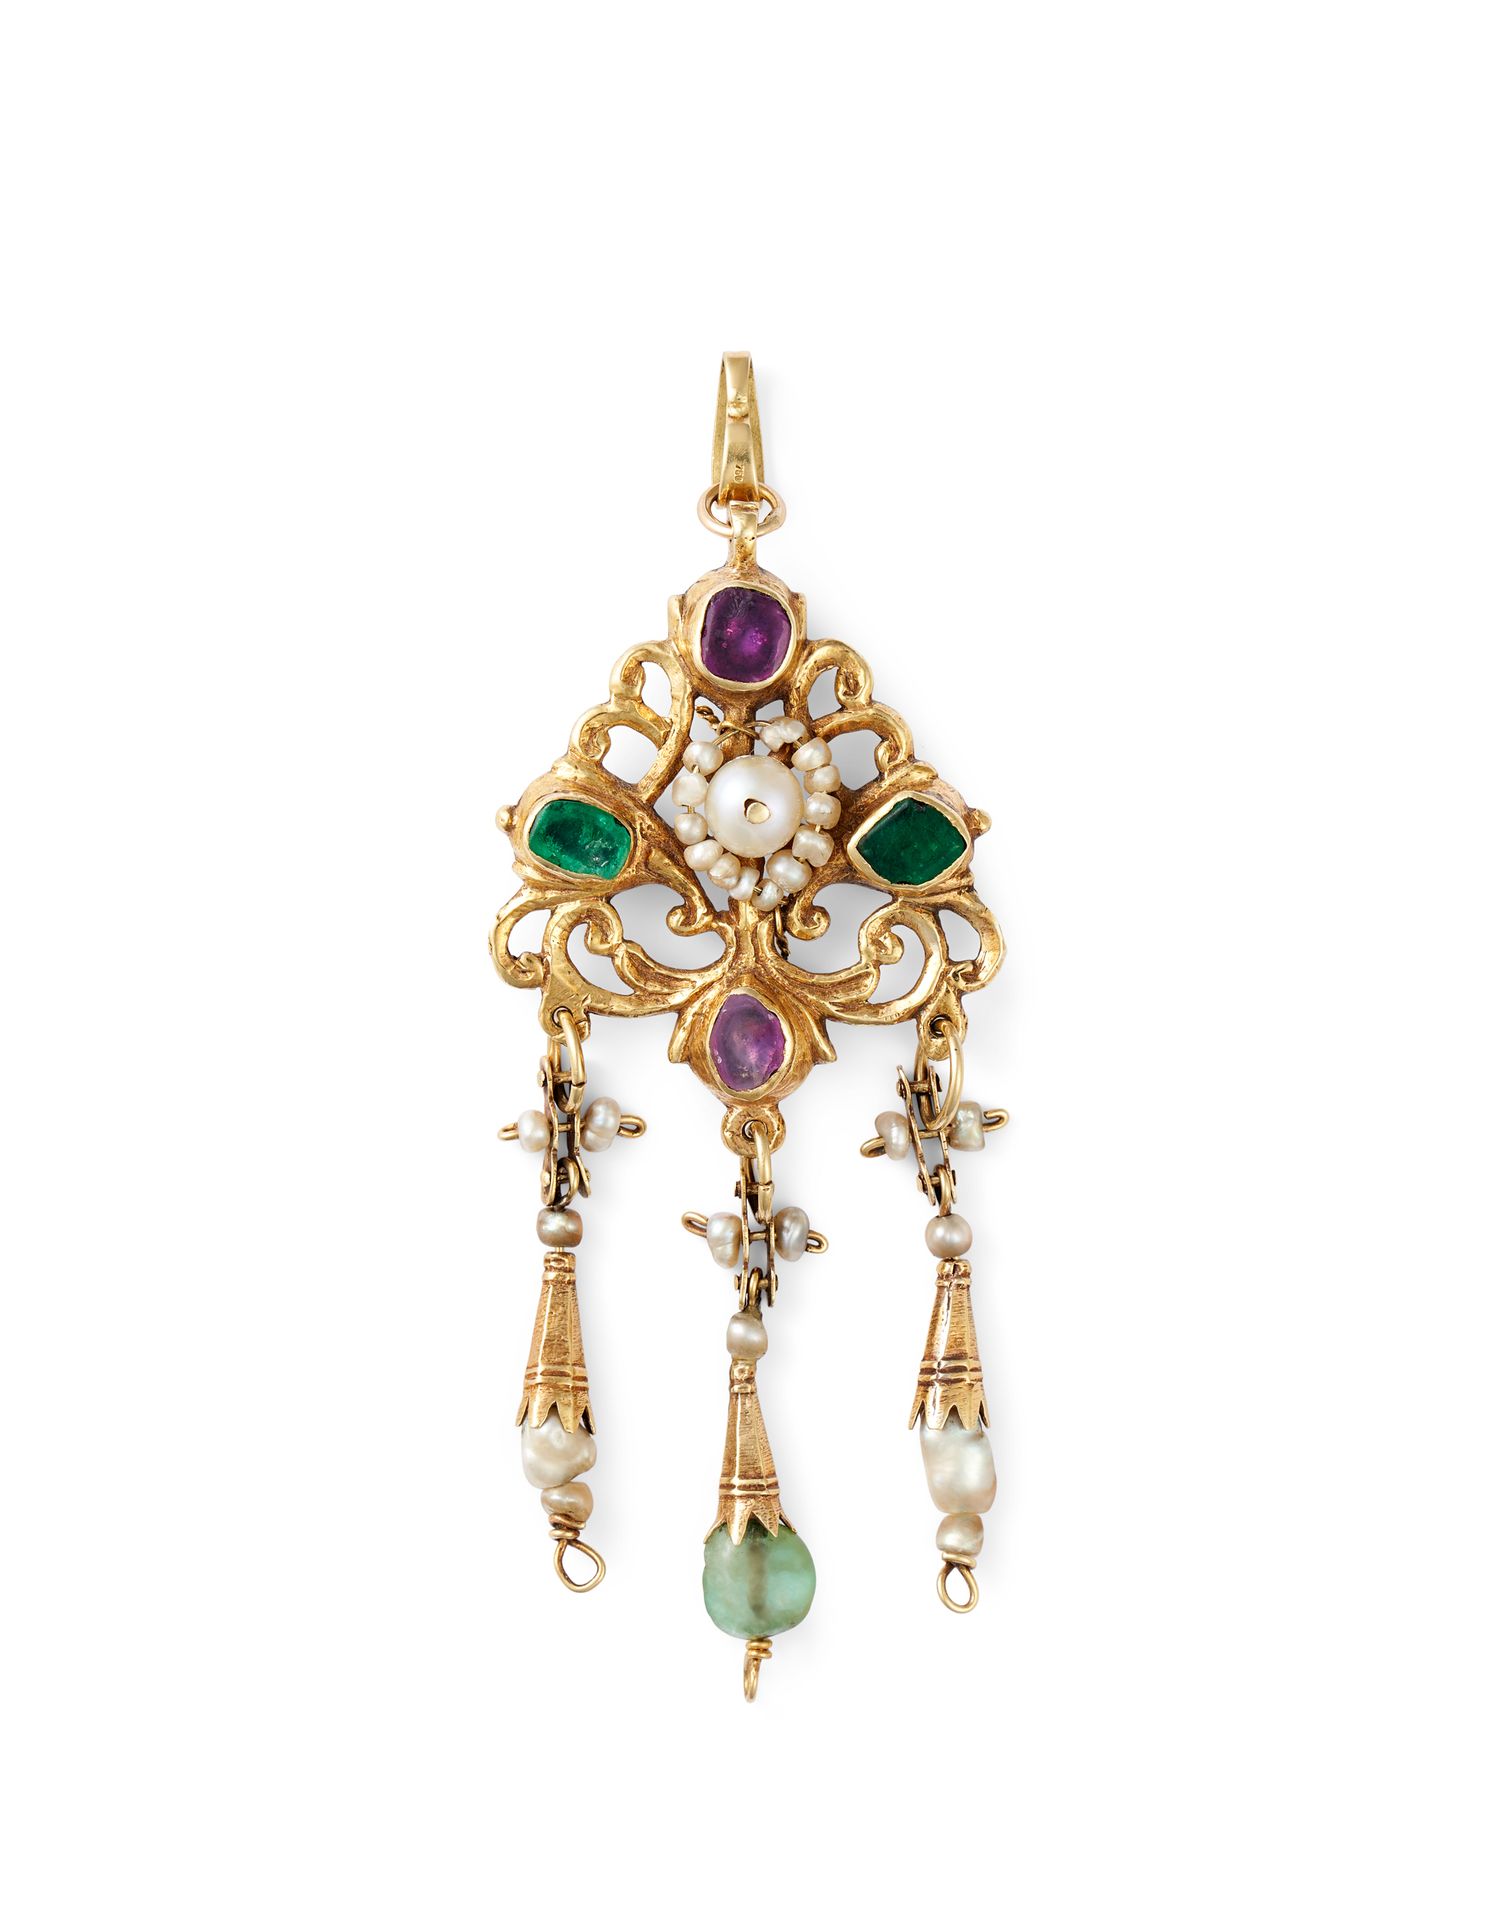 Null 奥地利-匈牙利吊坠 18K黄金，镶有2颗绿宝石、2颗紫水晶和珍珠。

印记：无

尺寸：8厘米 - Tw:33 g